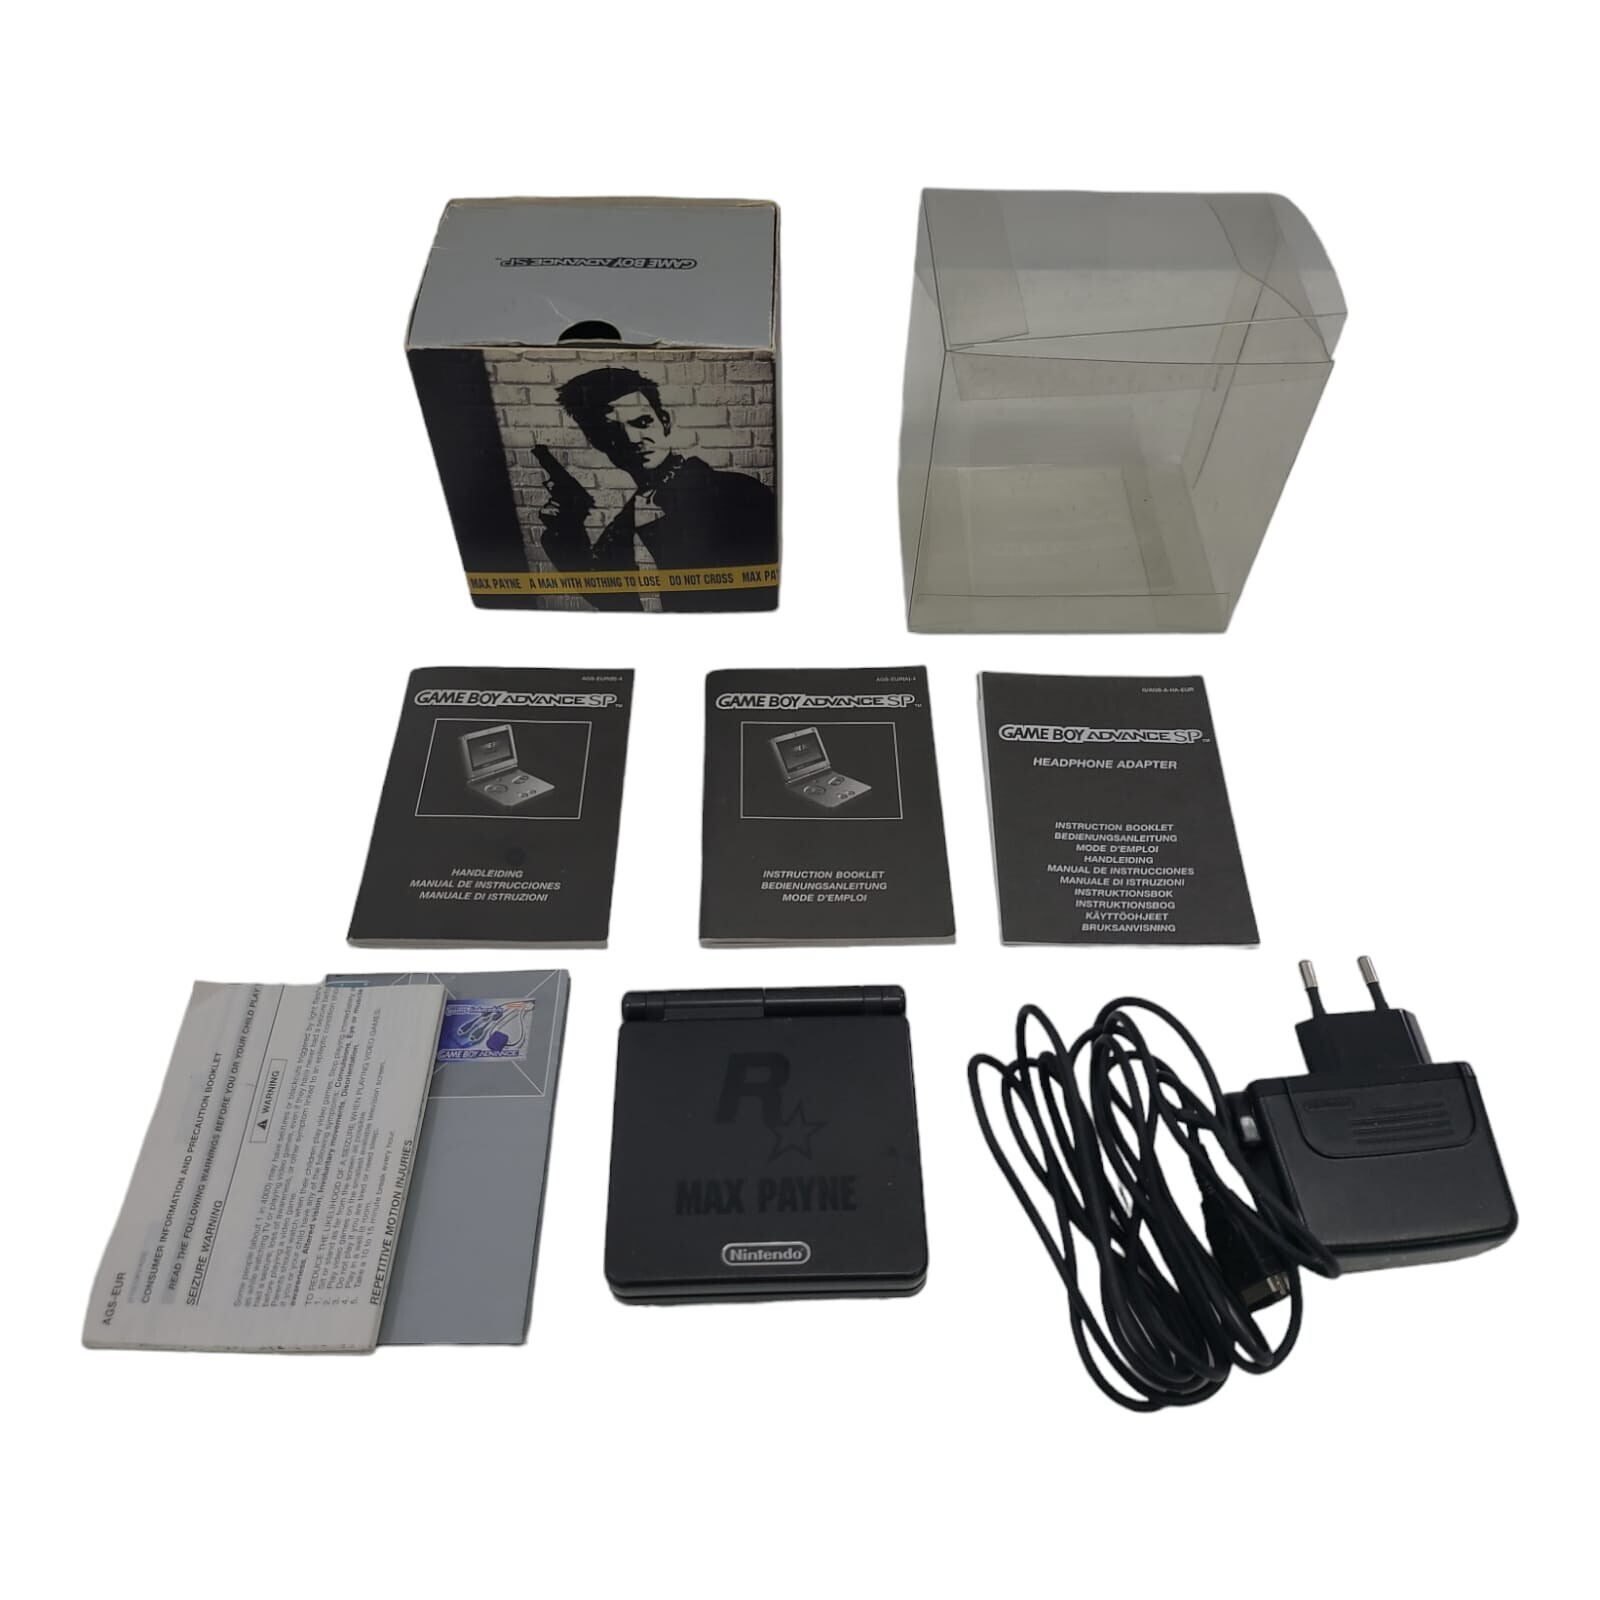  Nintendo Game Boy Advance SP  Rockstar Max Payne Edition